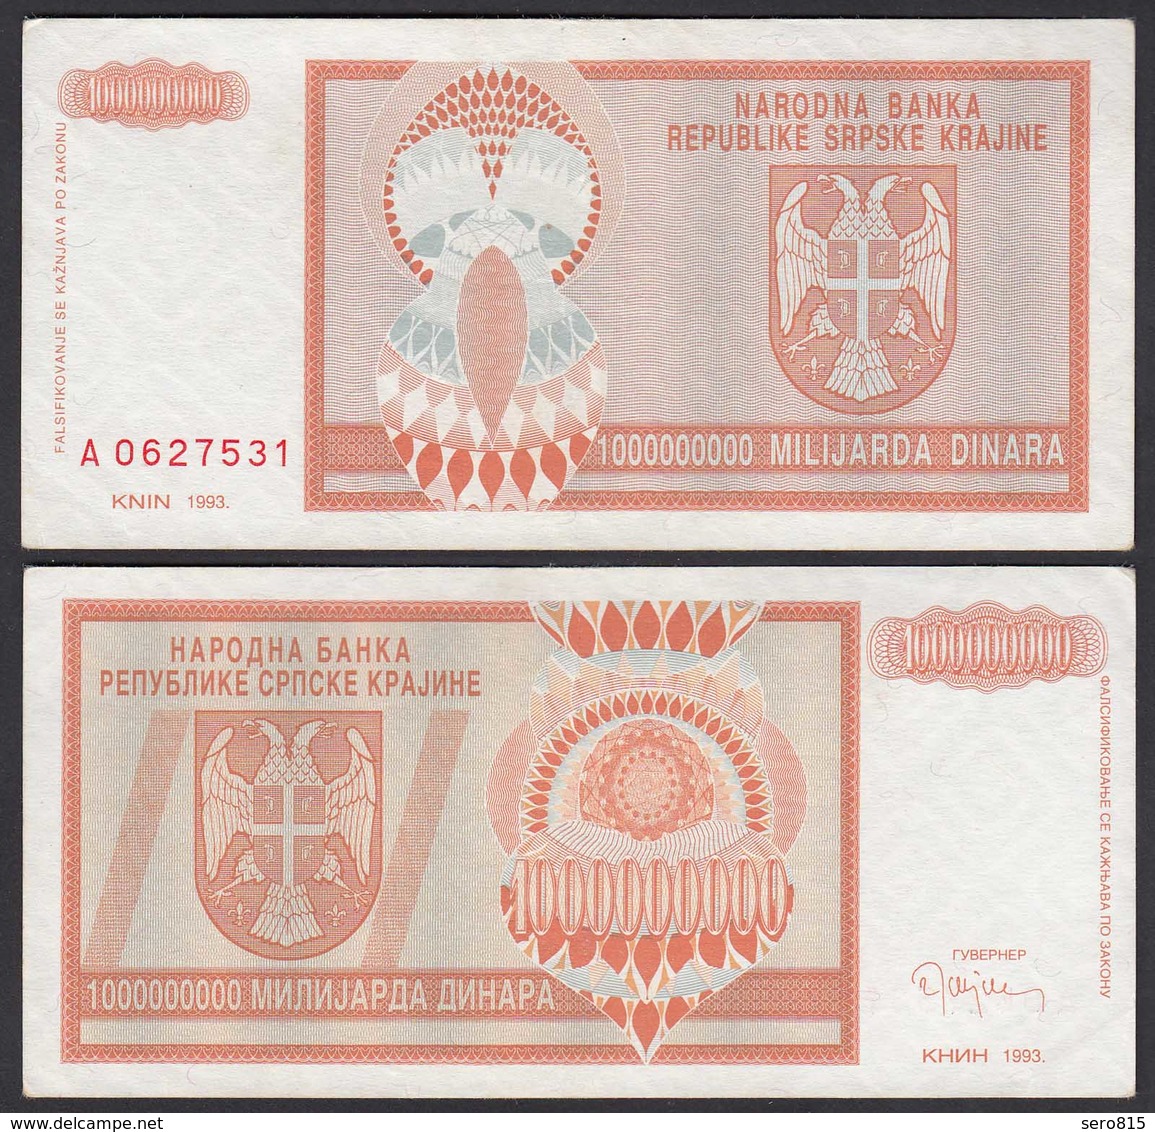 Kroatien - Croatia 1-Milliarde Dinara Banknote 1993 Pick R17 VF (3)  (25126 - Croatia